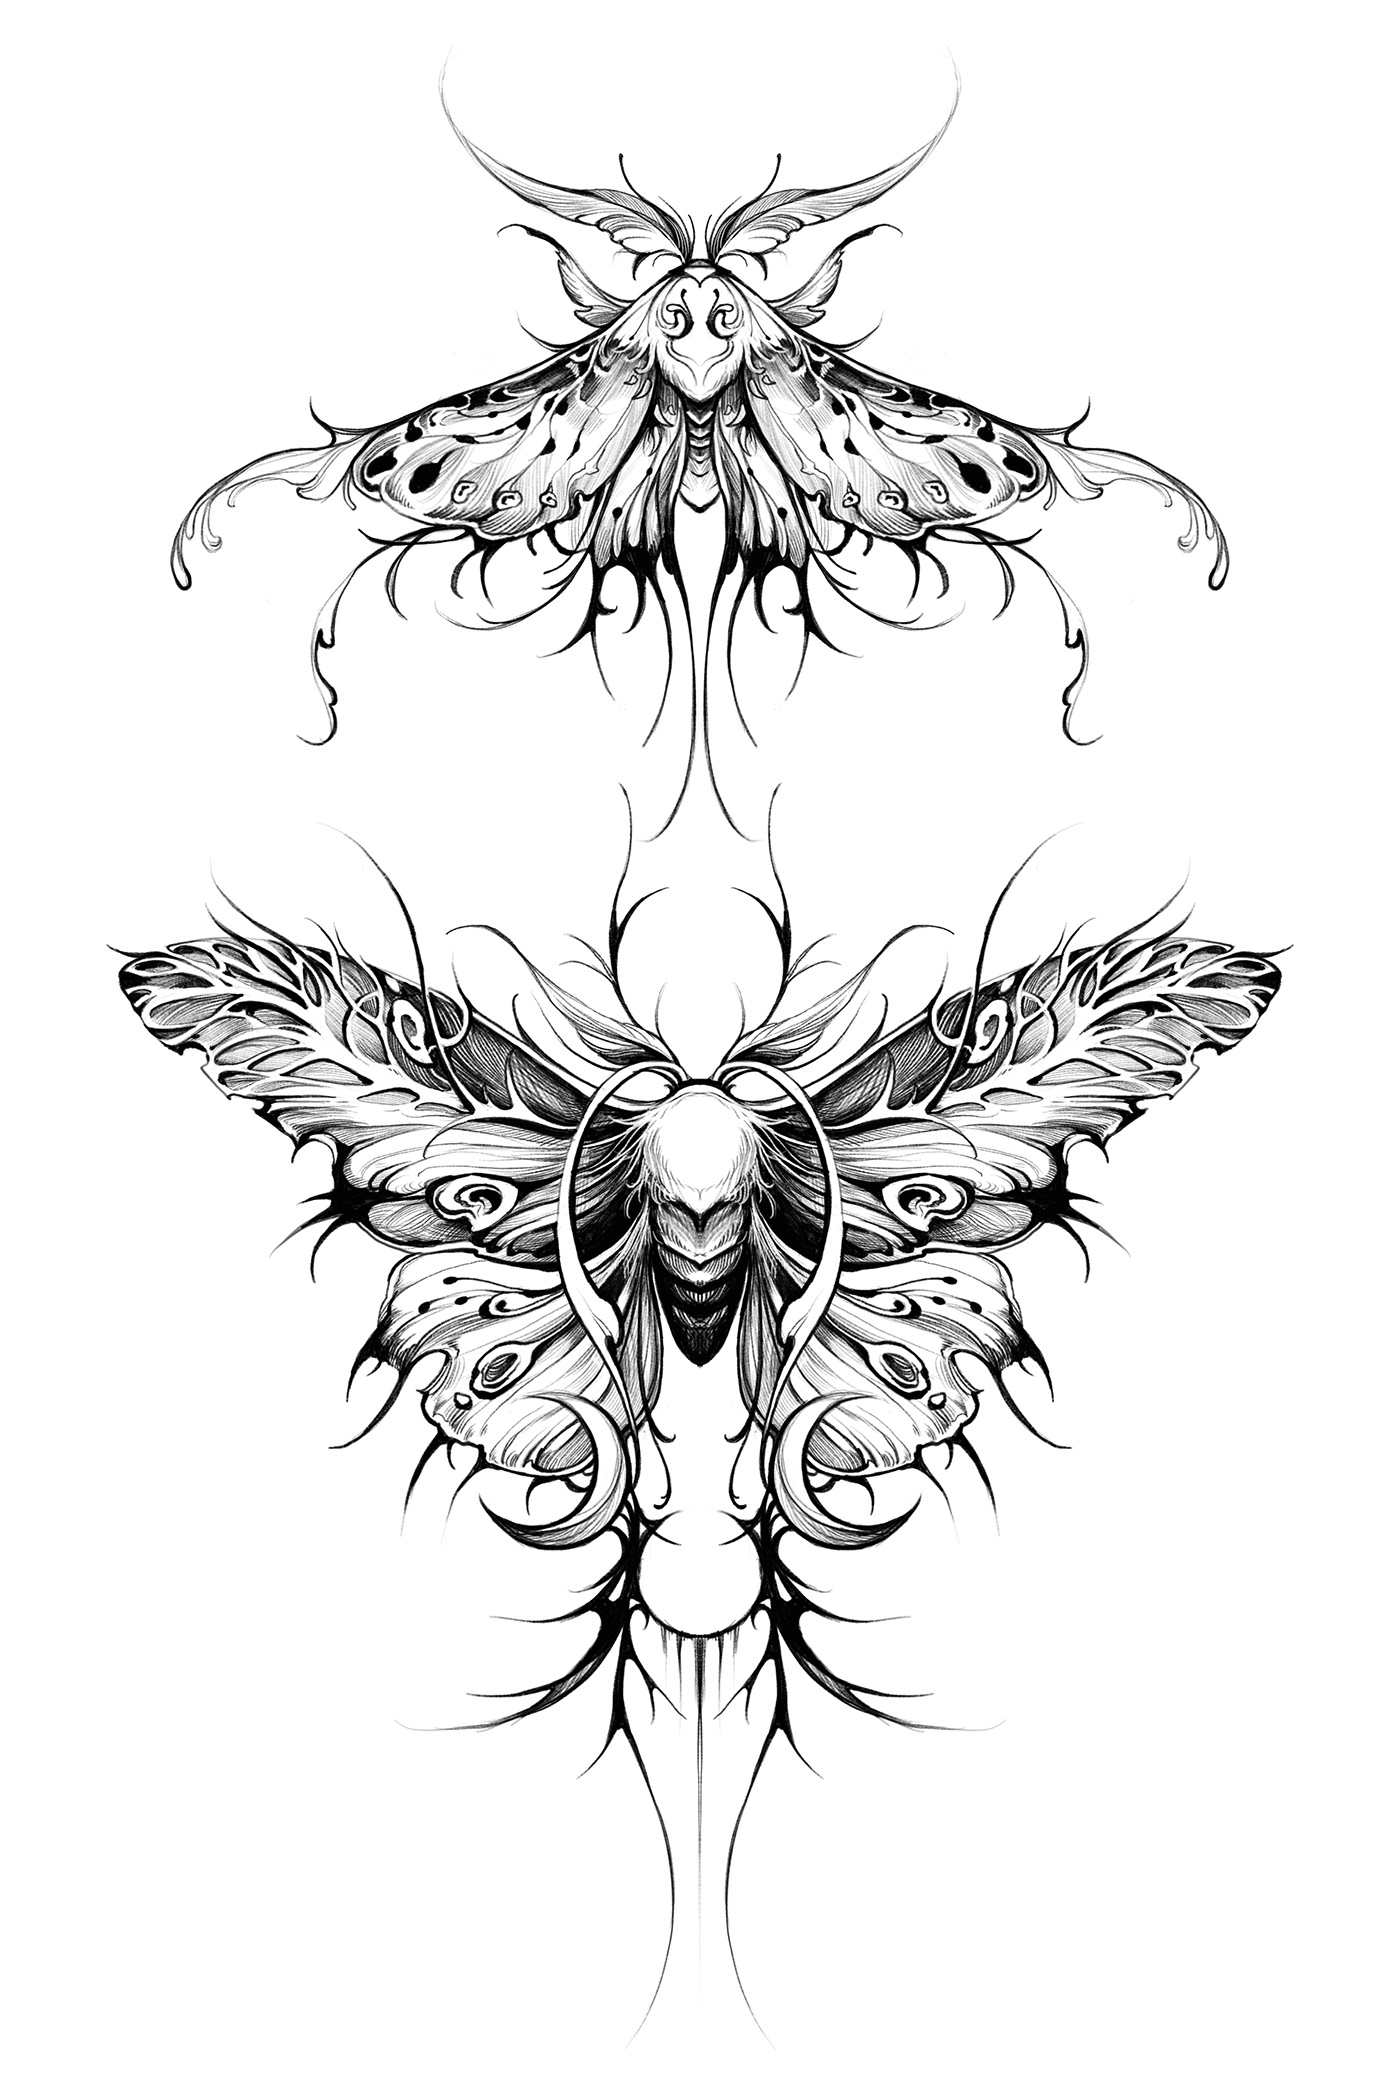 Procreate Digital Art  Tattoo Art prosecc animal moth fantasy graphic digital painting